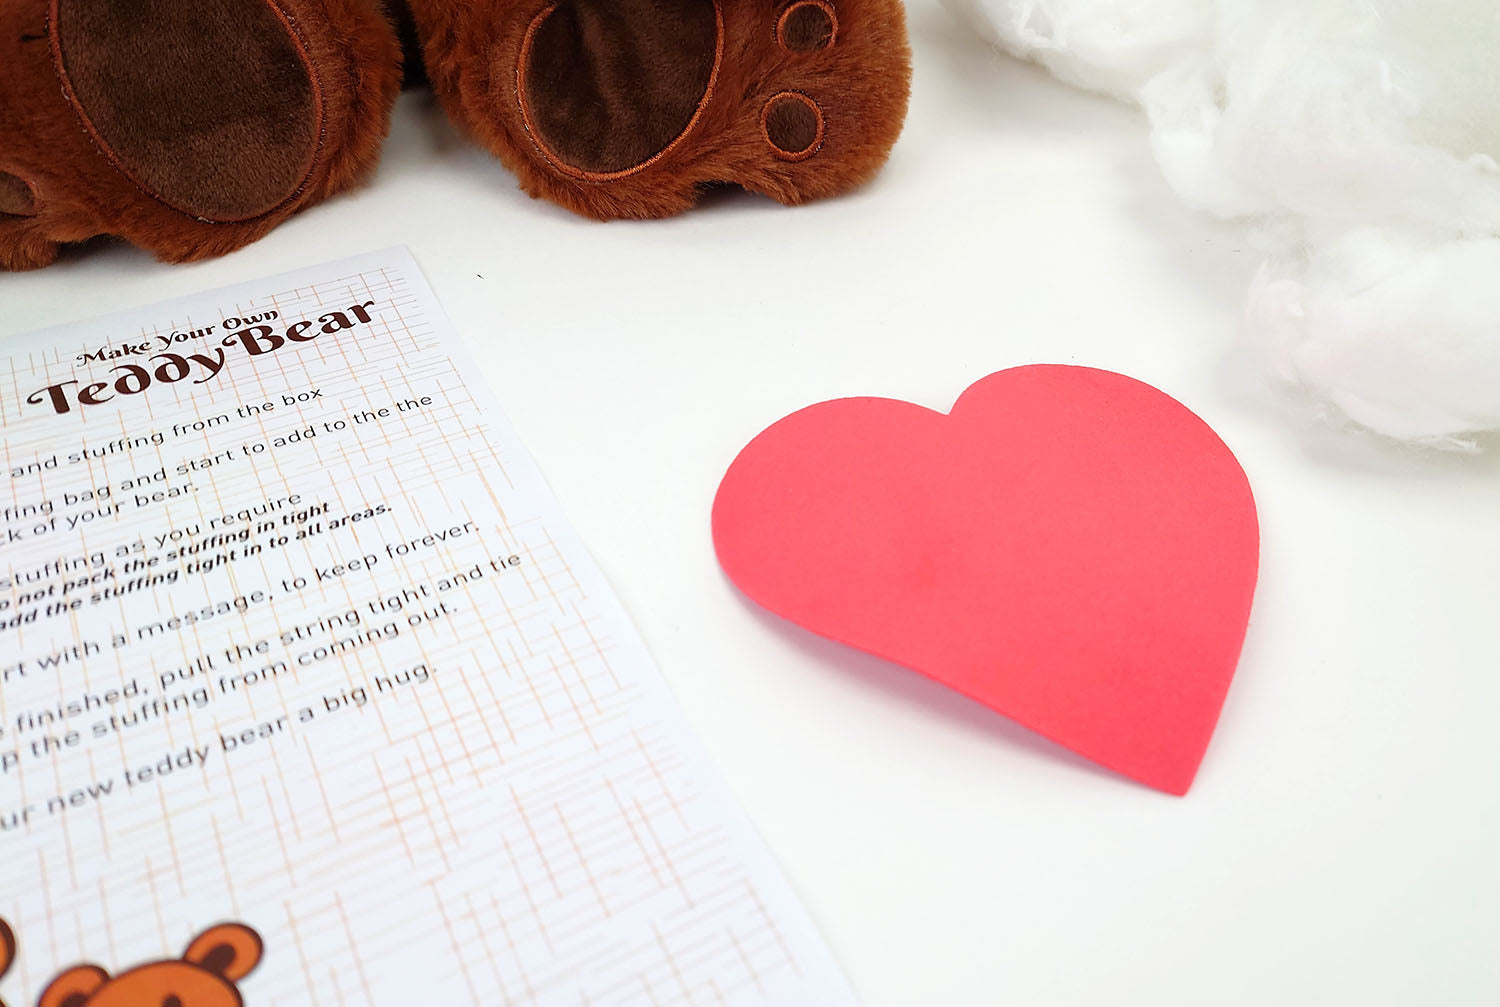 Craftsadora Make Your Own Teddy Bear Kit